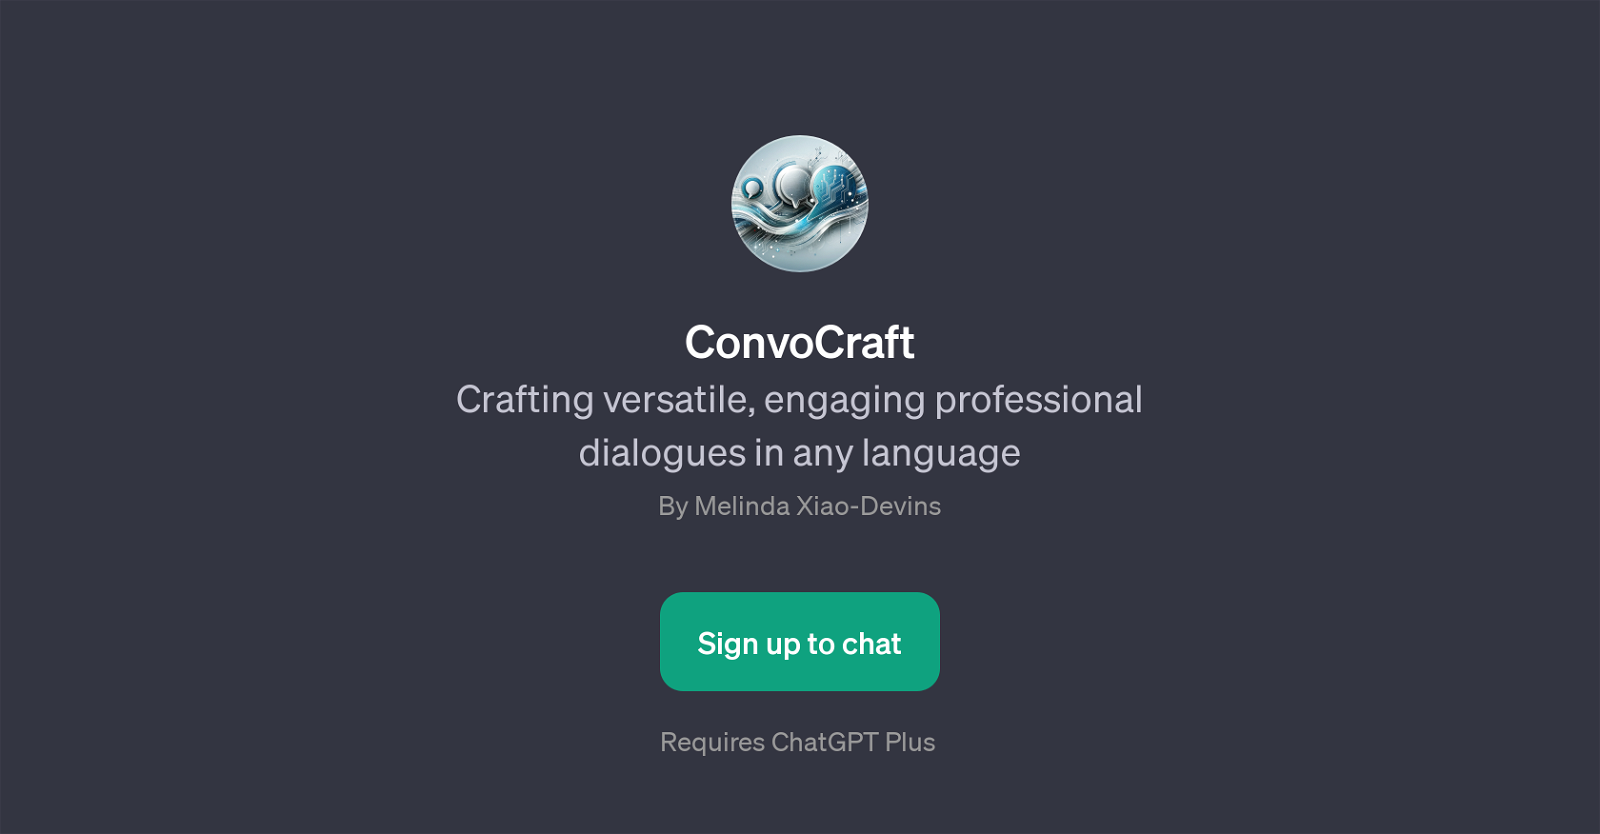 ConvoCraft website